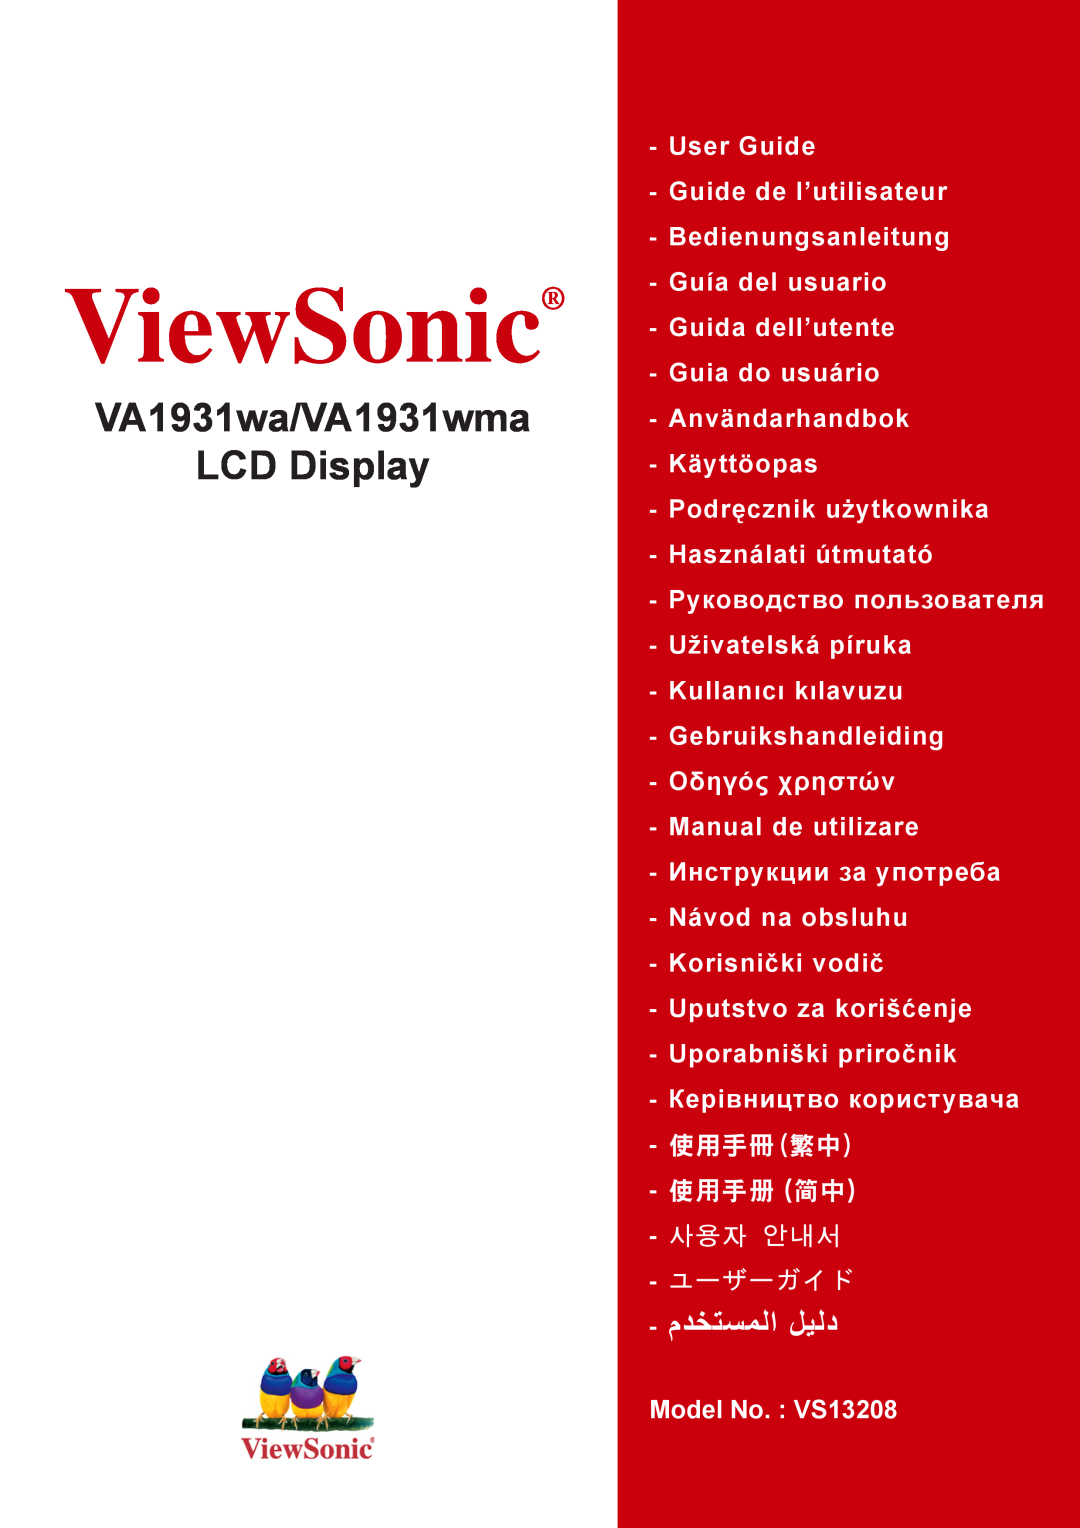 ViewSonic VA1931WMA manual ViewSonic, VA1931wa/VA1931wma LCD Display, ﻢﺪﺨﺘﺴﻤﻠﺍ ﻞﻴﻠﺪ, 使用手冊繁中 使用手冊 簡中, 사용자 안내서, ユーザーガイド 